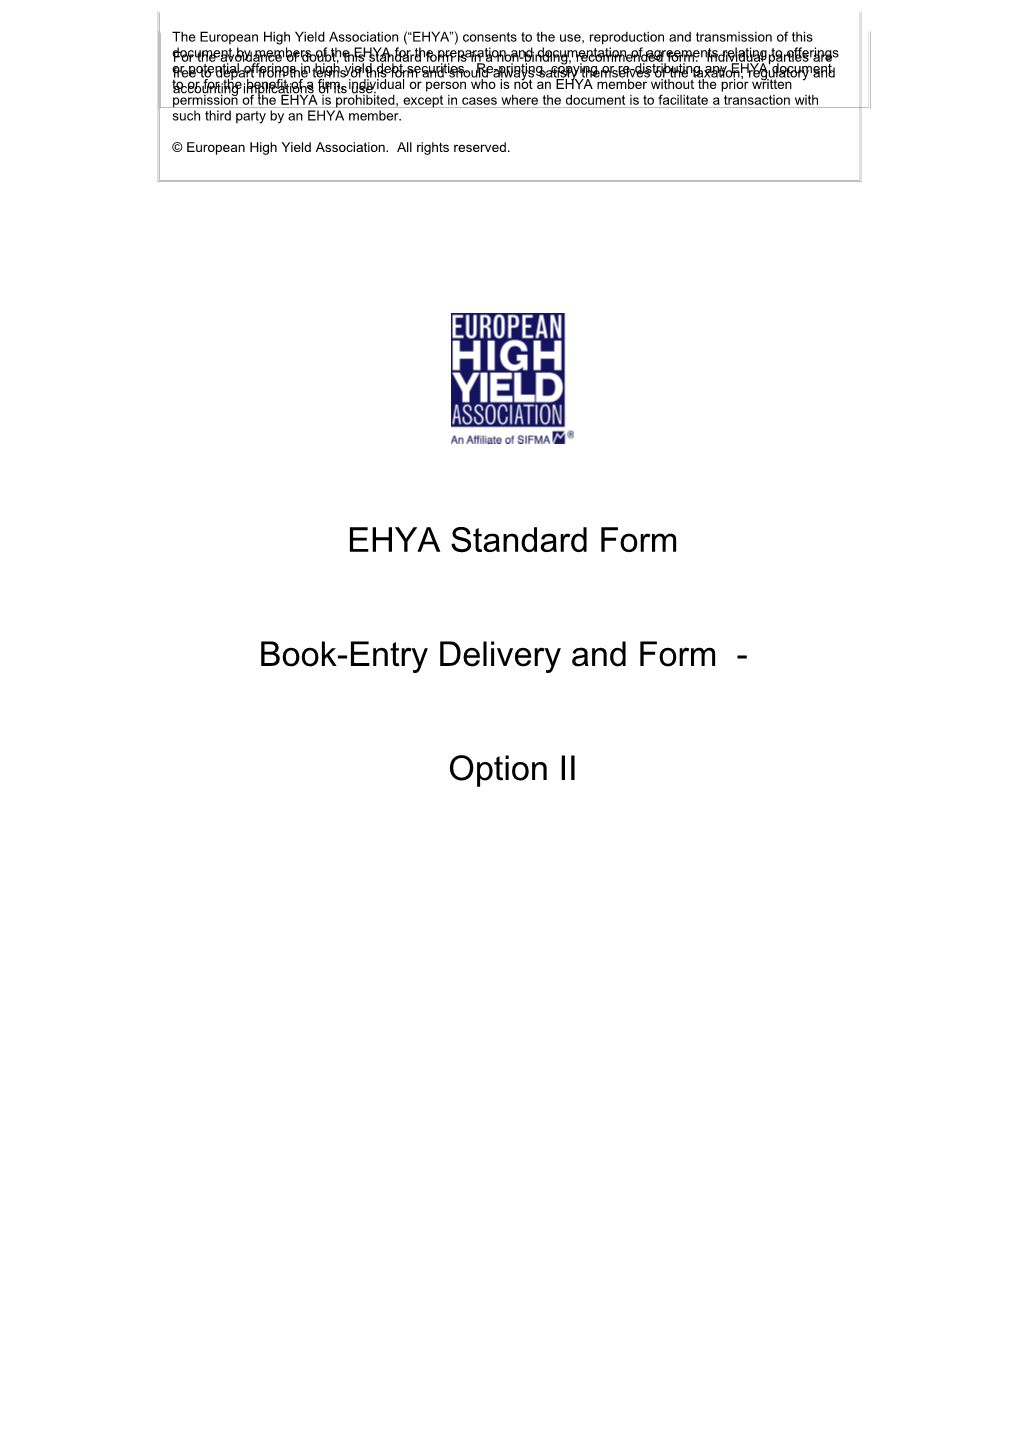 EHYA Standard Form: Book-Entry Delivery &amp; Form - Option II